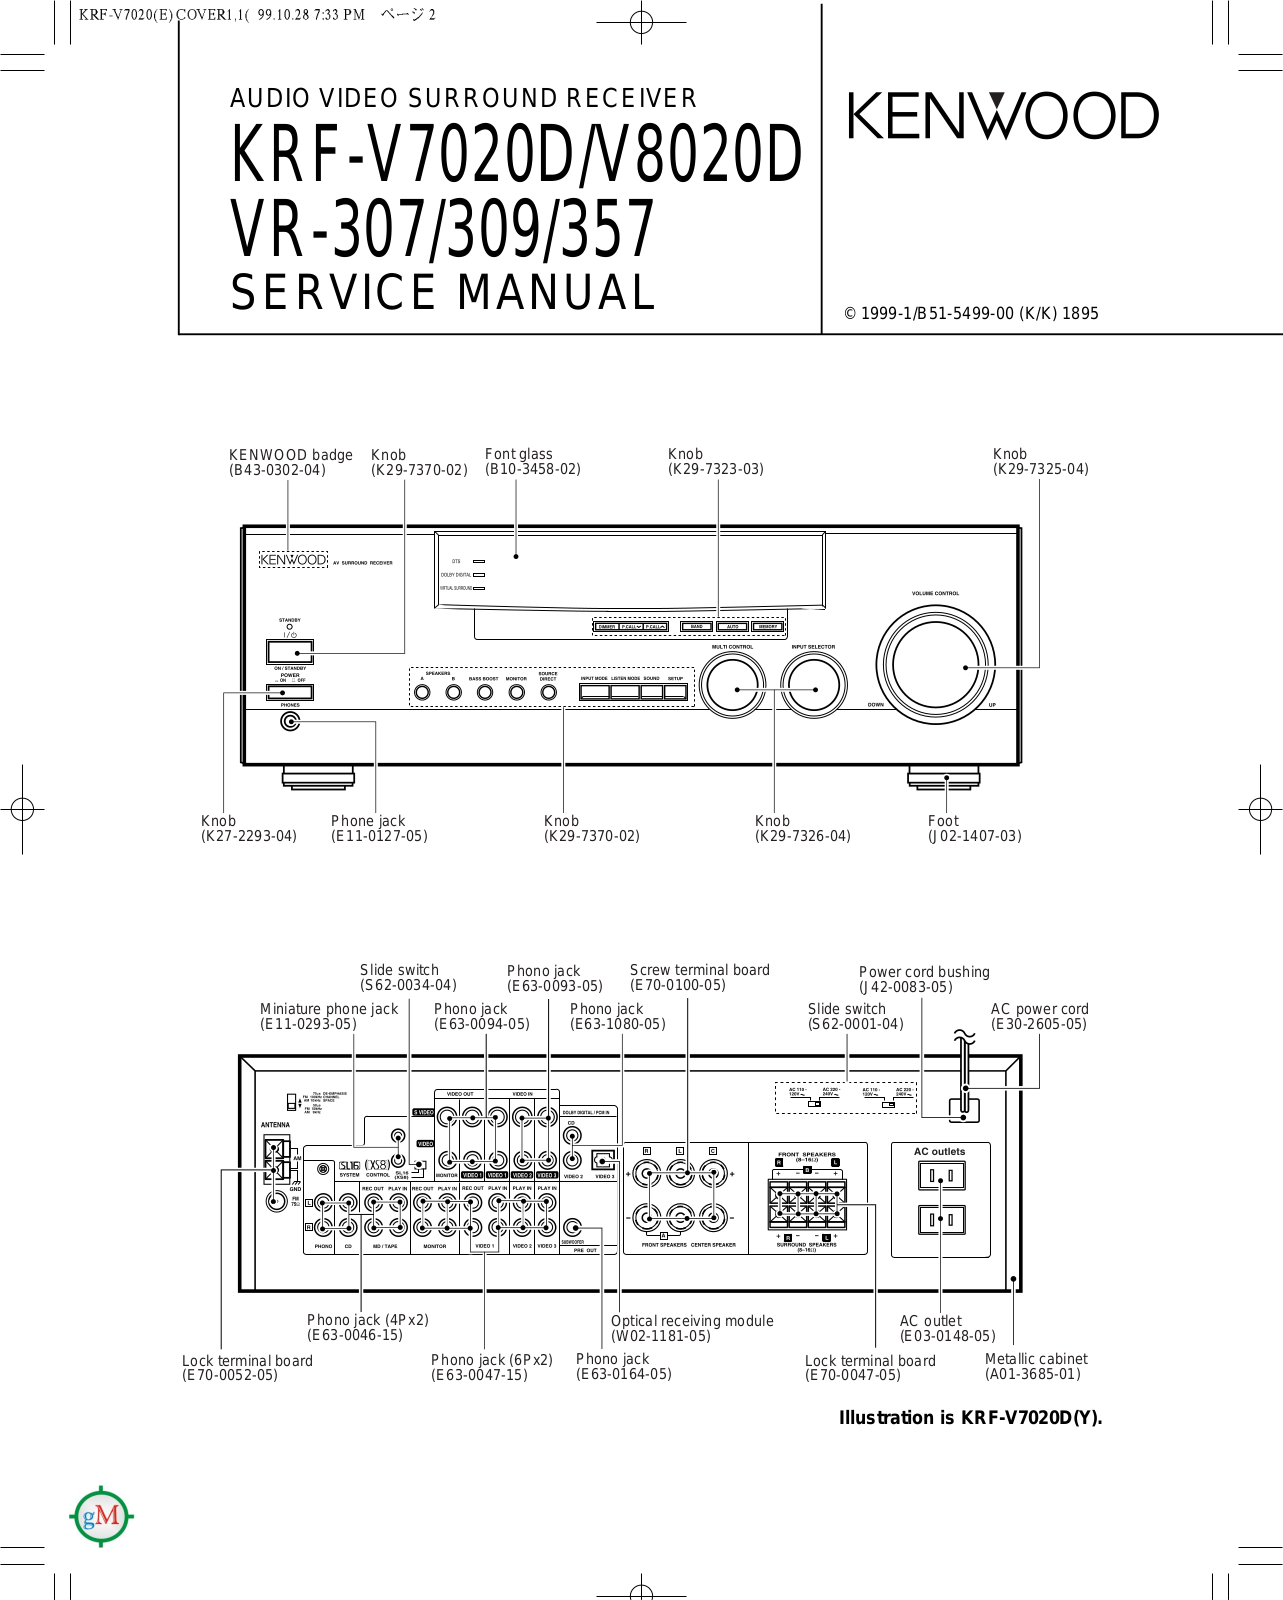 Kenwood KRFV-7020-D, KRFV-8020-D, VR-307, VR-309, VR-357 Service manual